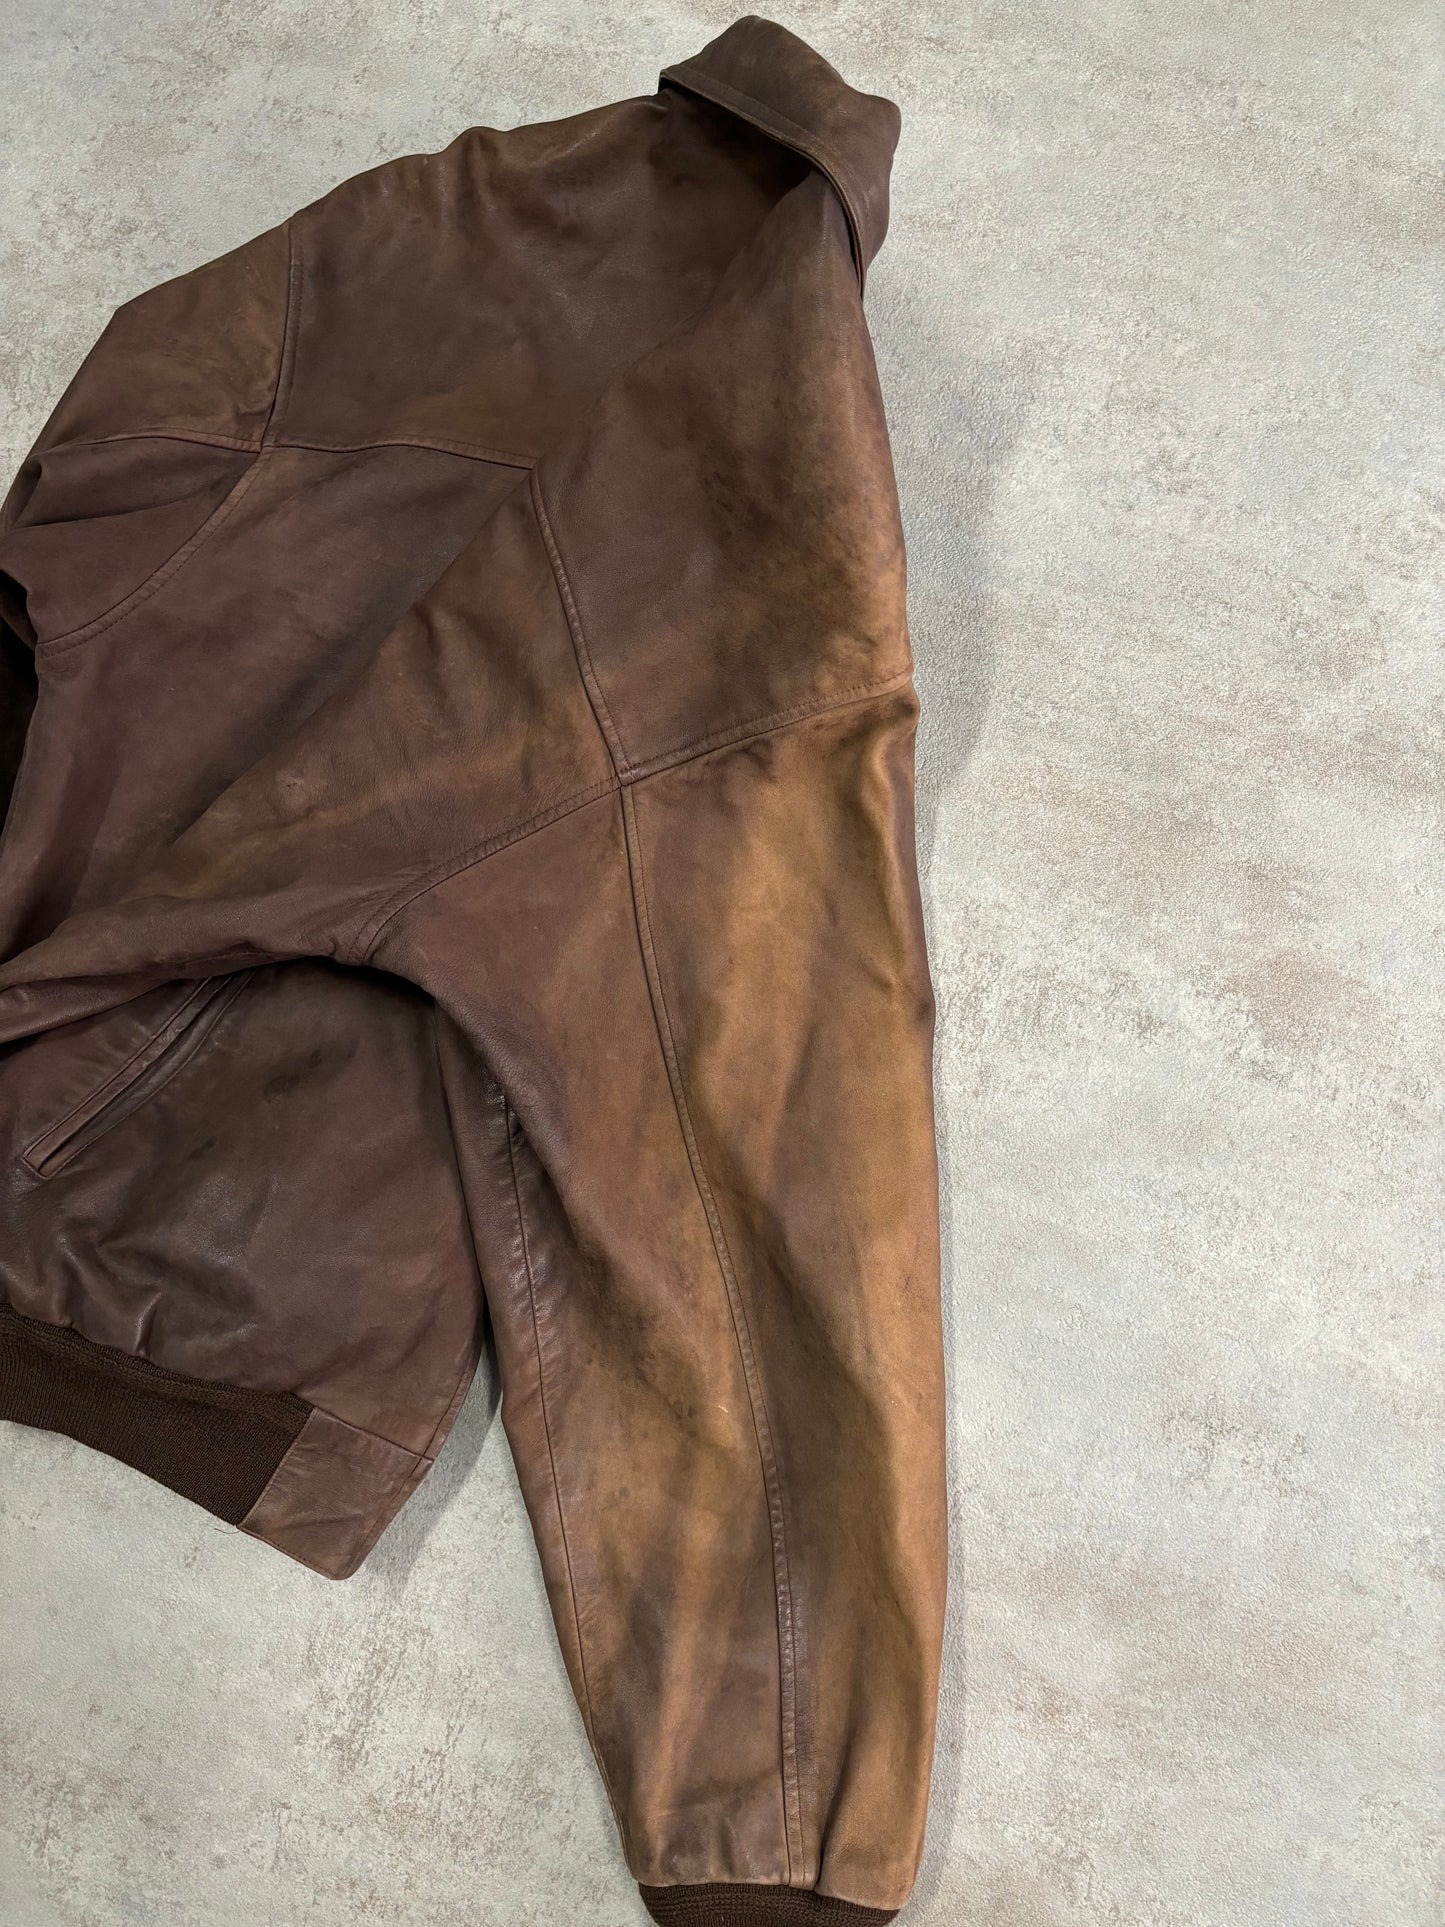 Hugo Boss 80s Vintage Leather Jacket - XL